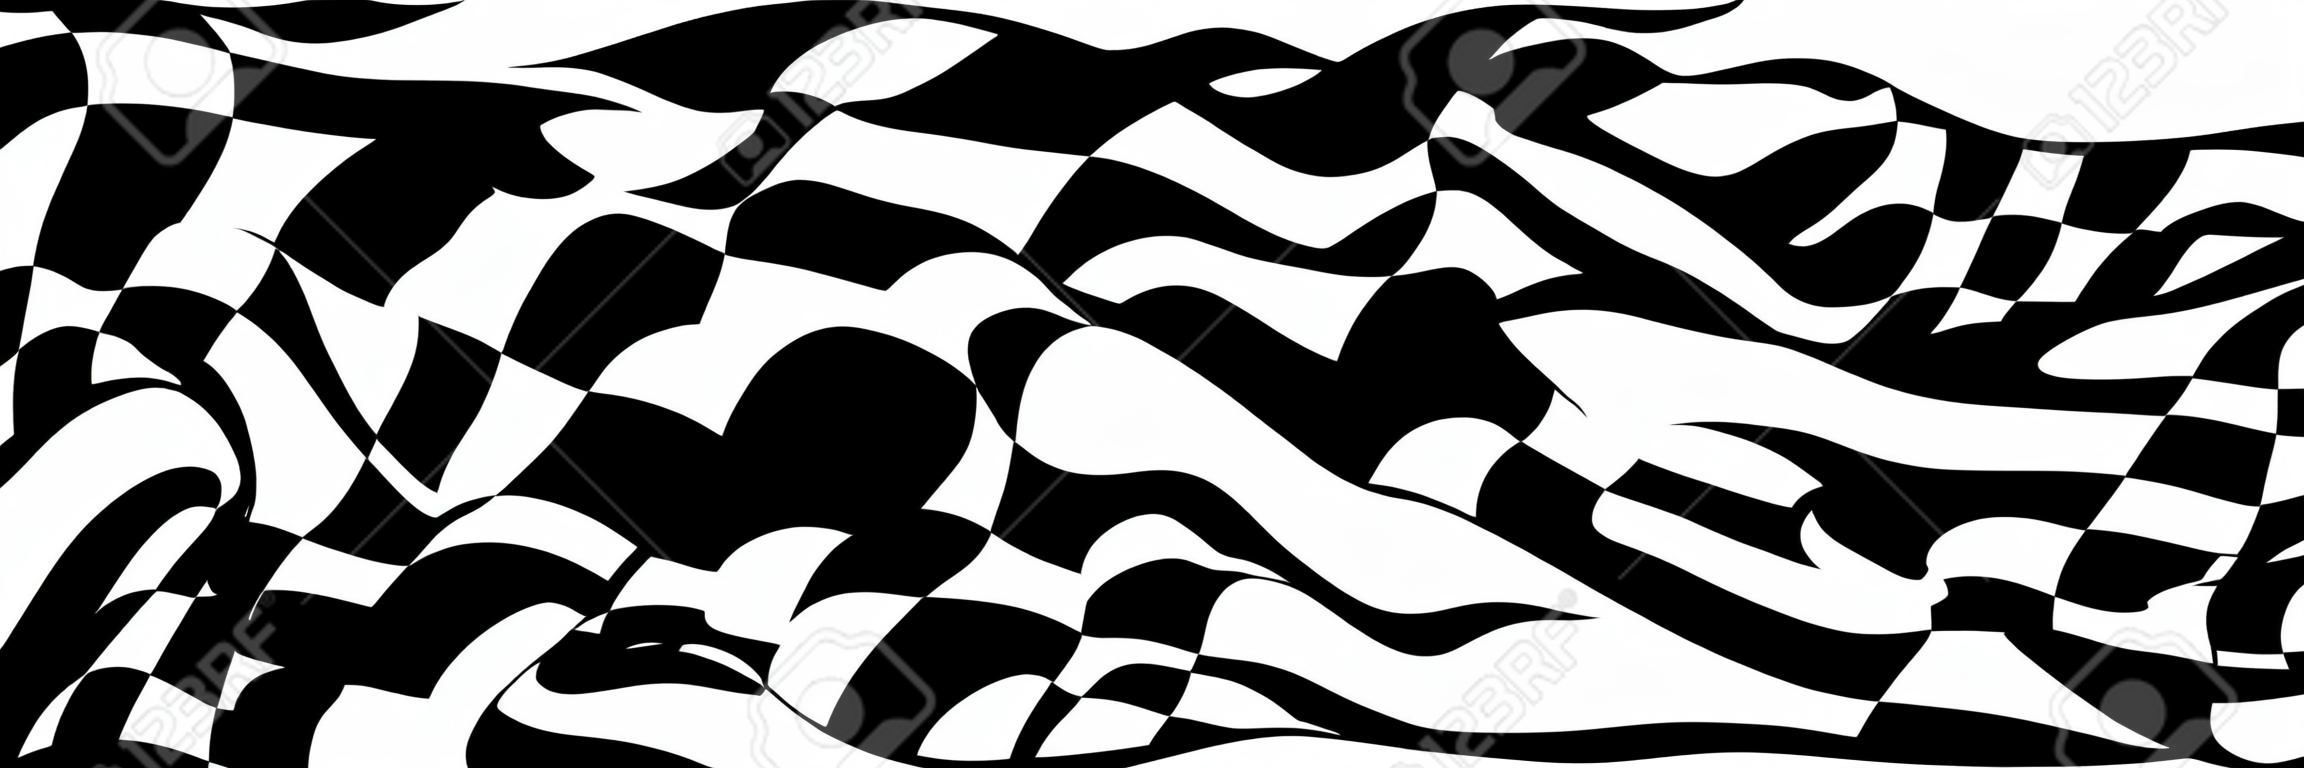 Checkered flag - symbol racing